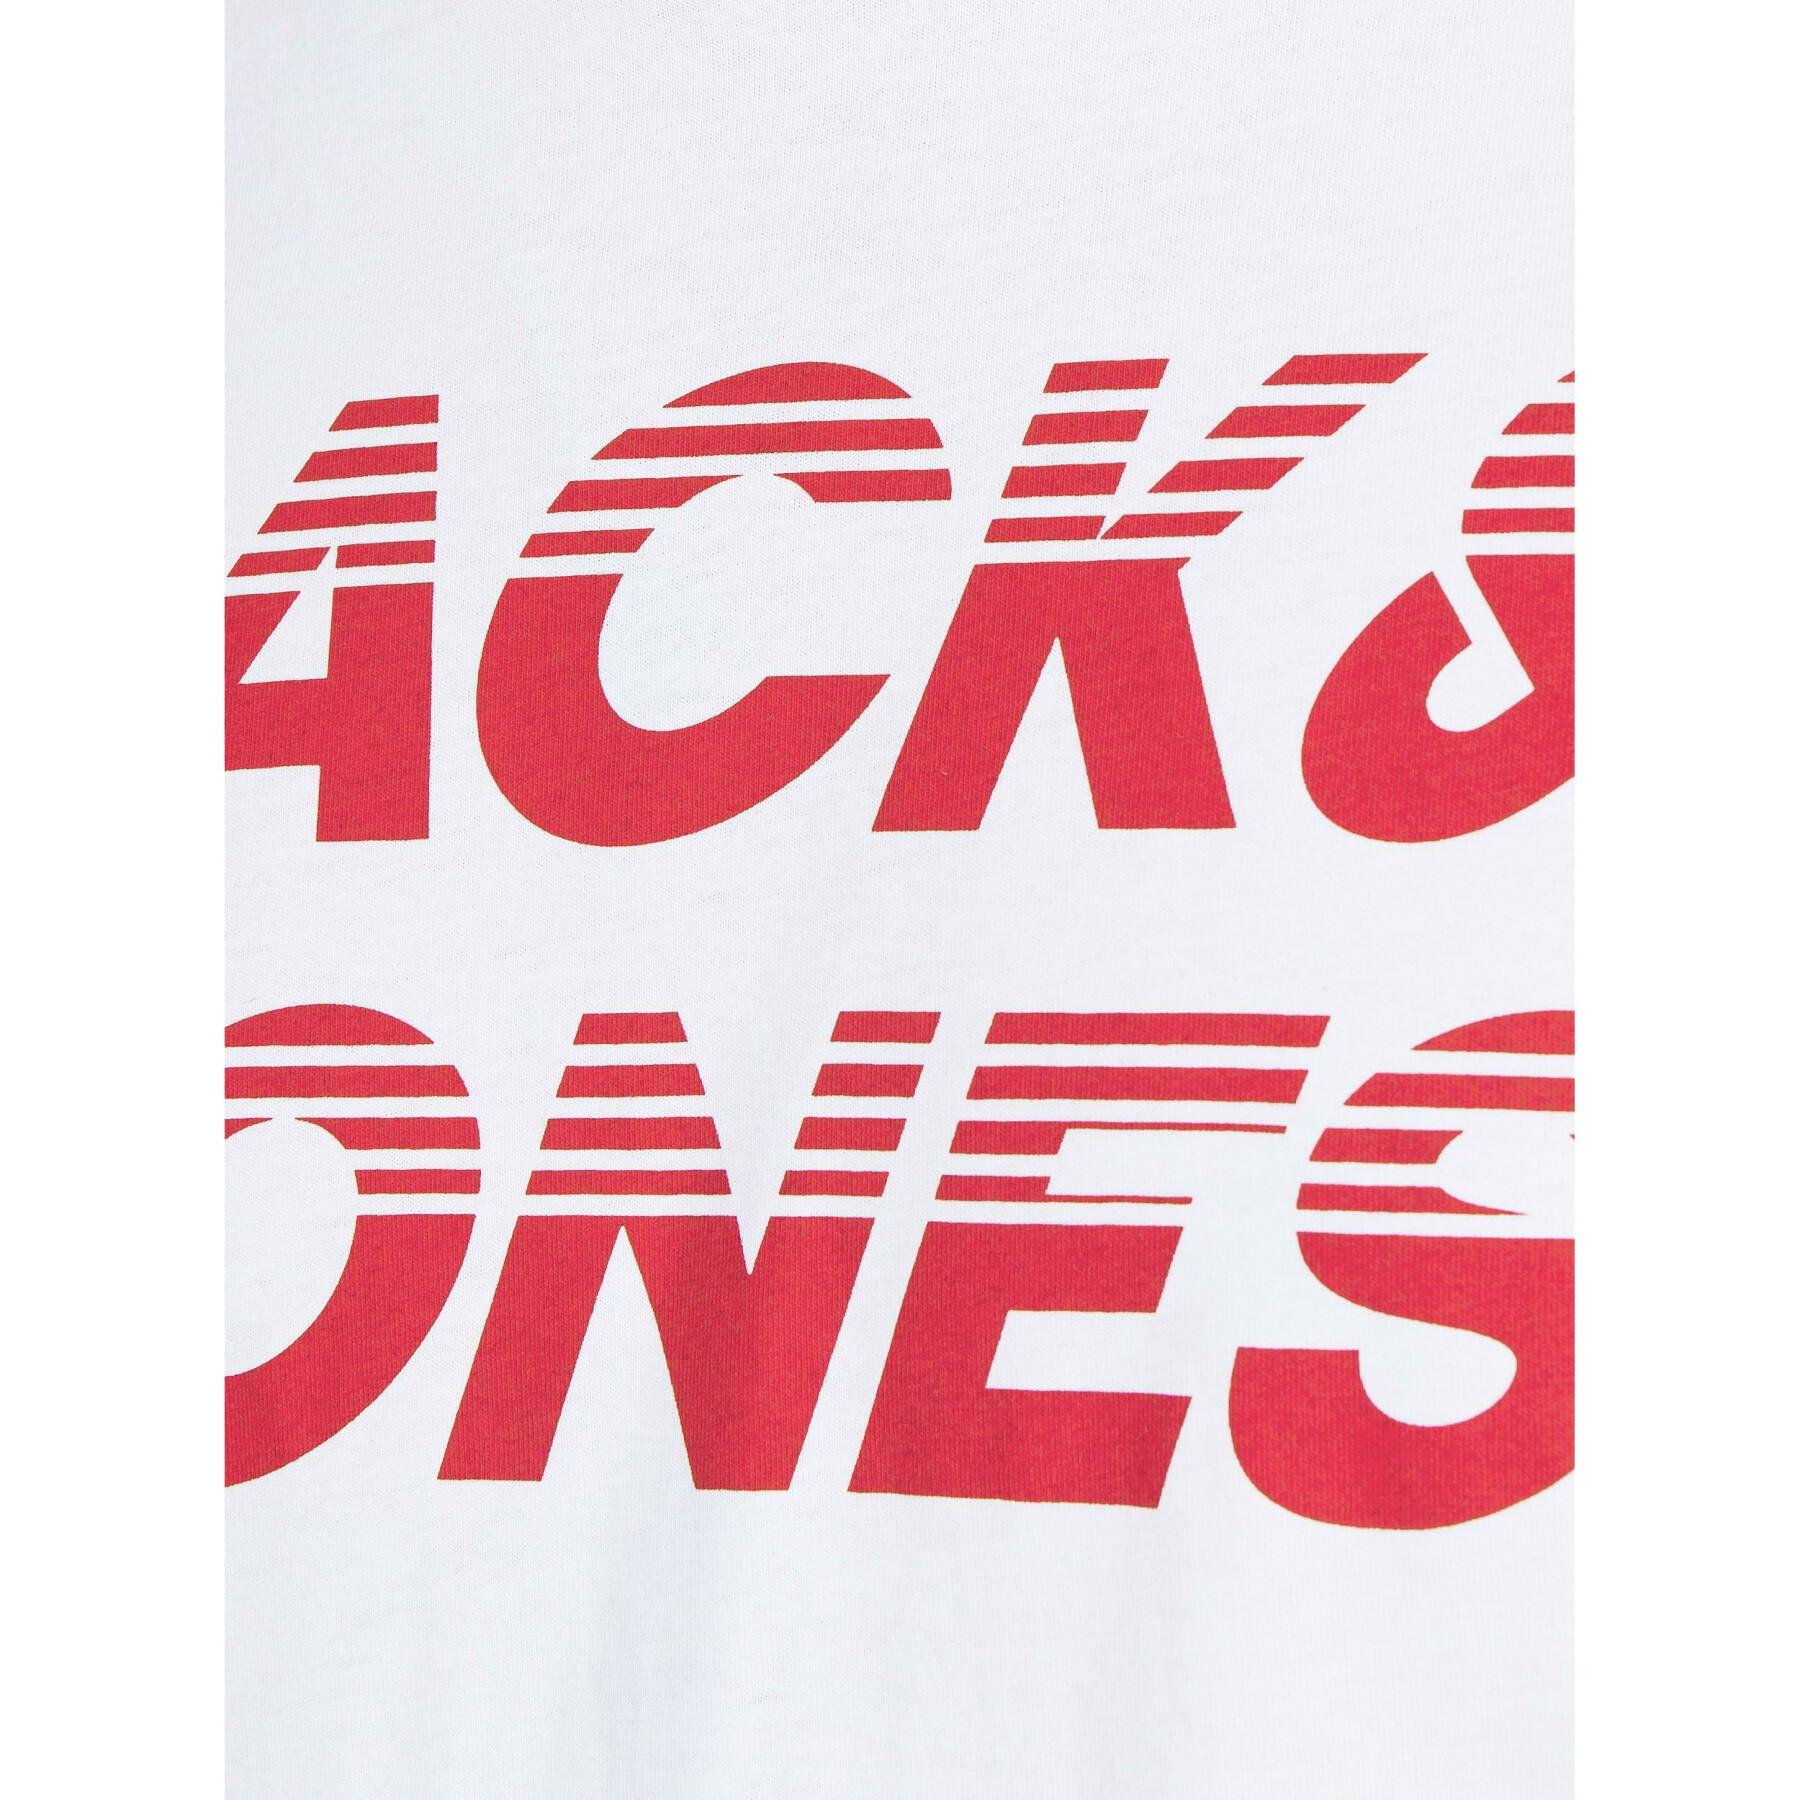 Camiseta Jack & Jones Basic